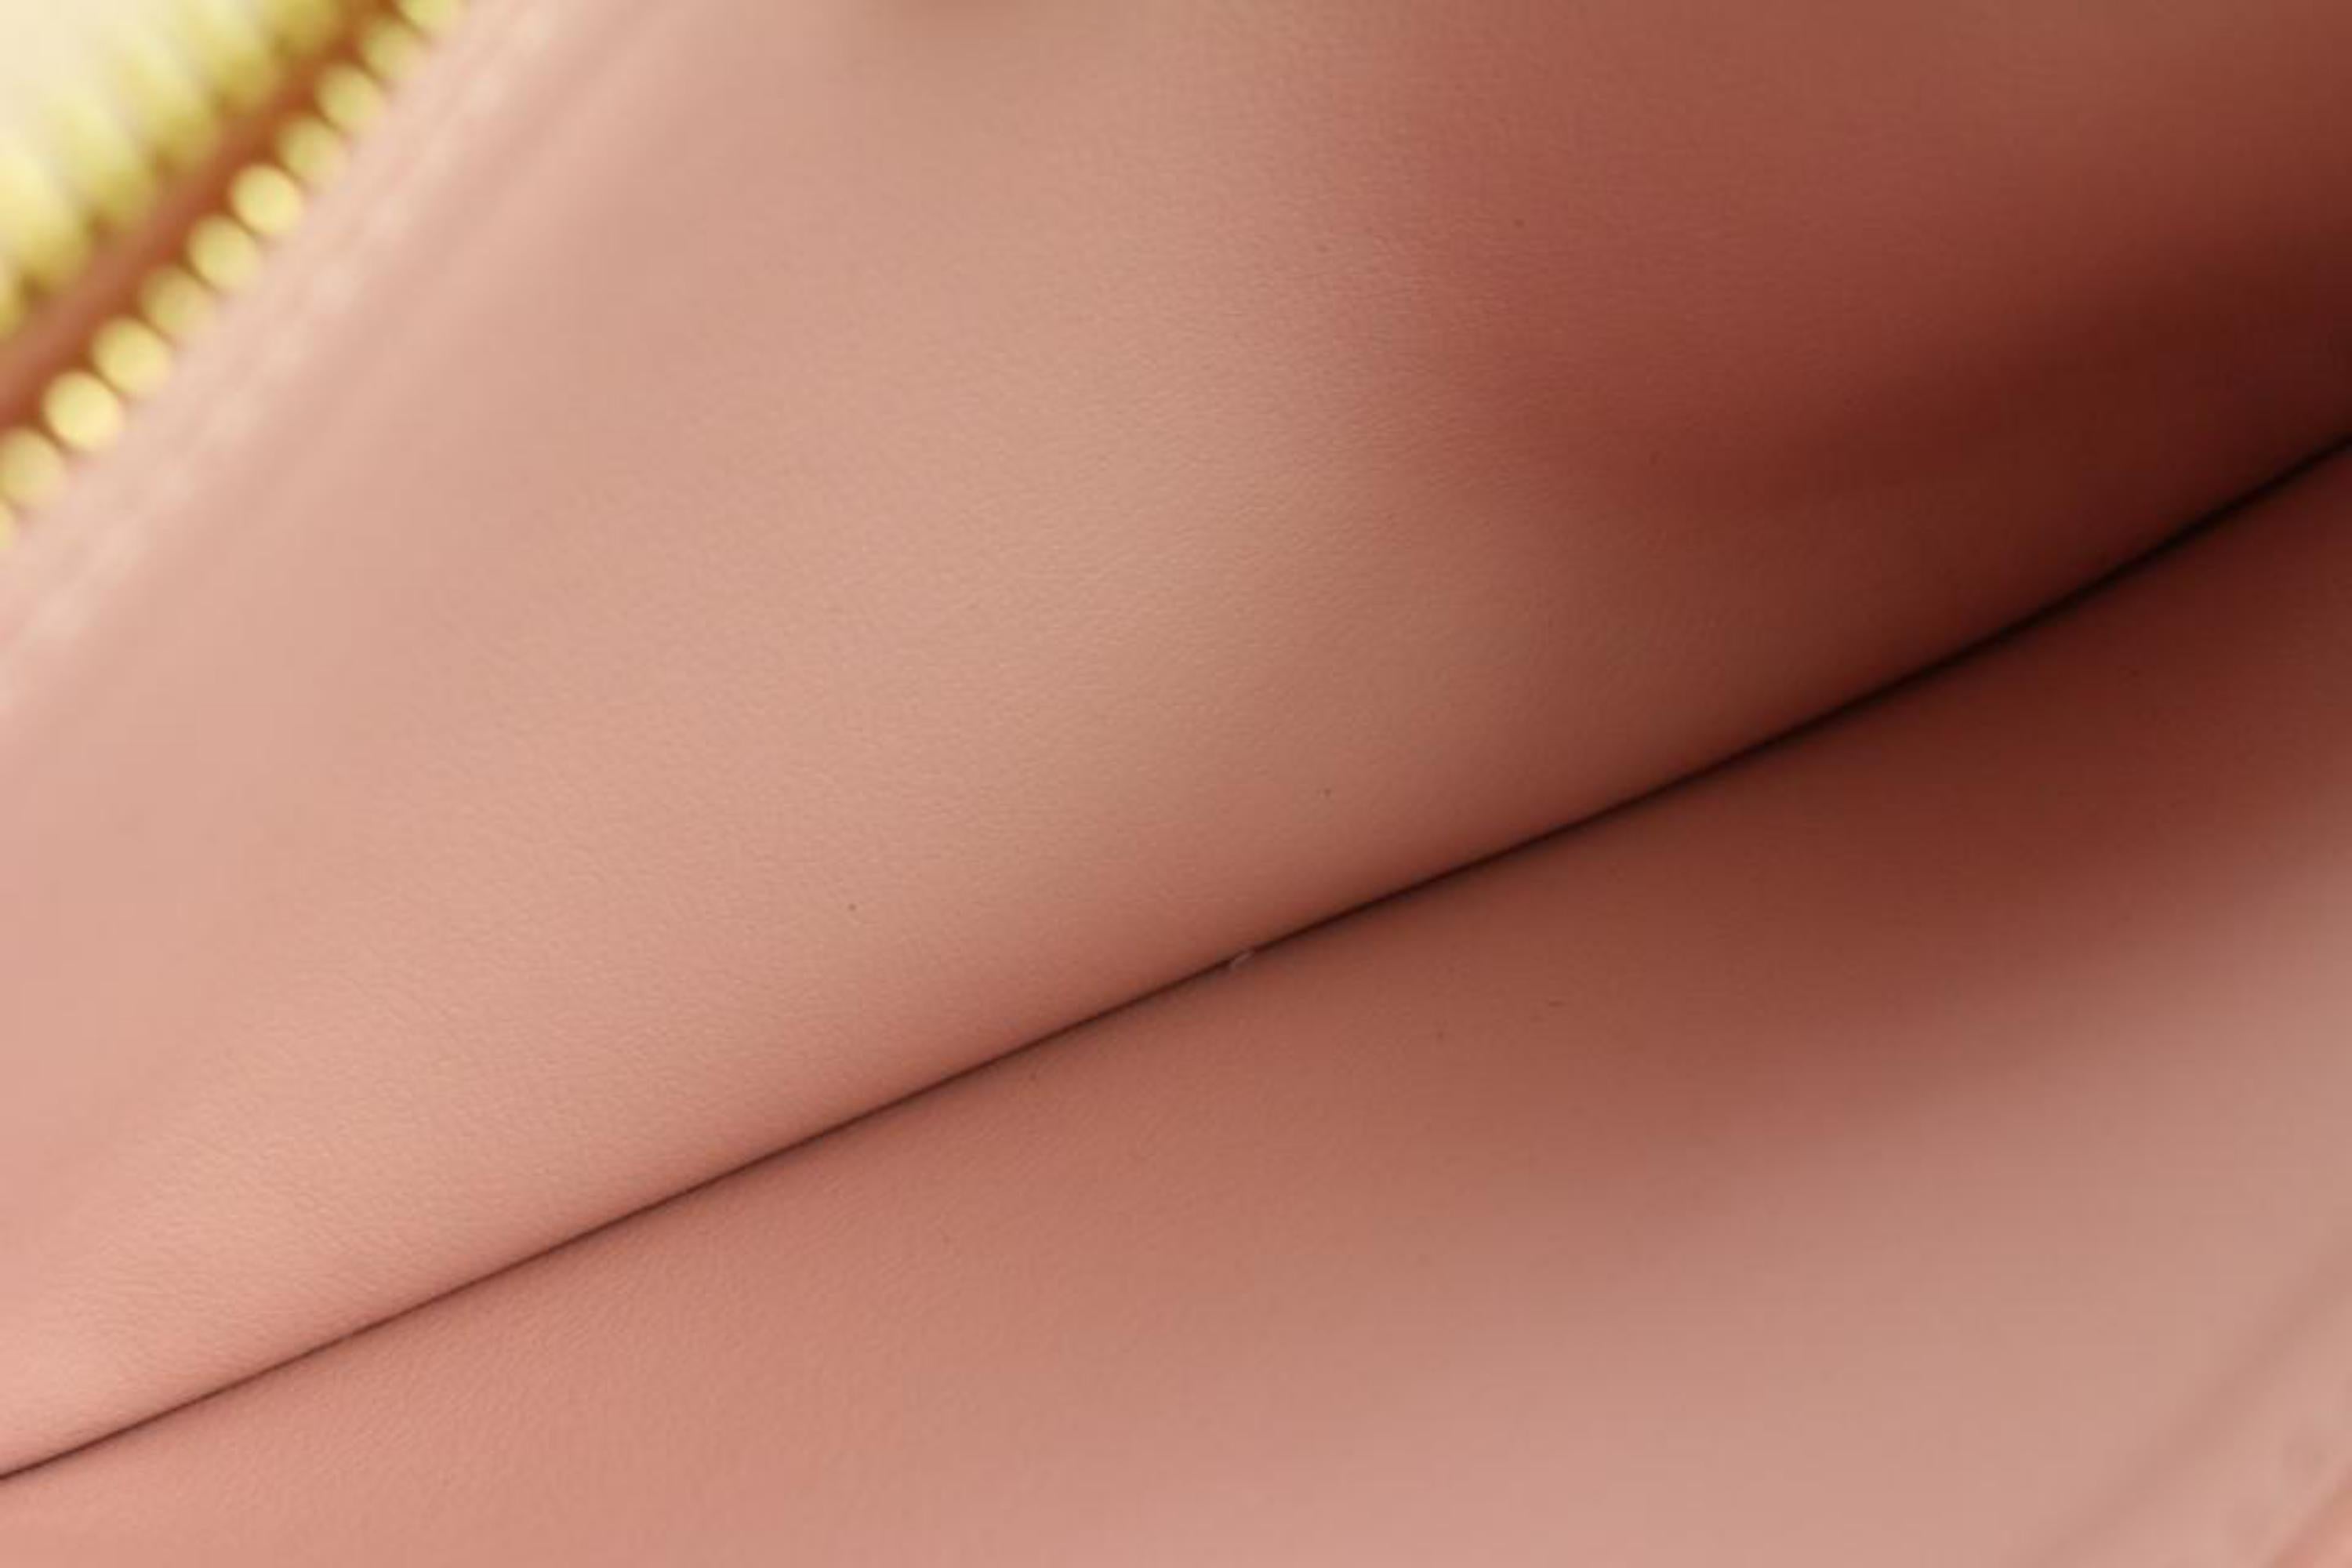 Louis Vuitton Pink Monogram Empreinte Leather Zippy Wallet Louis Vuitton